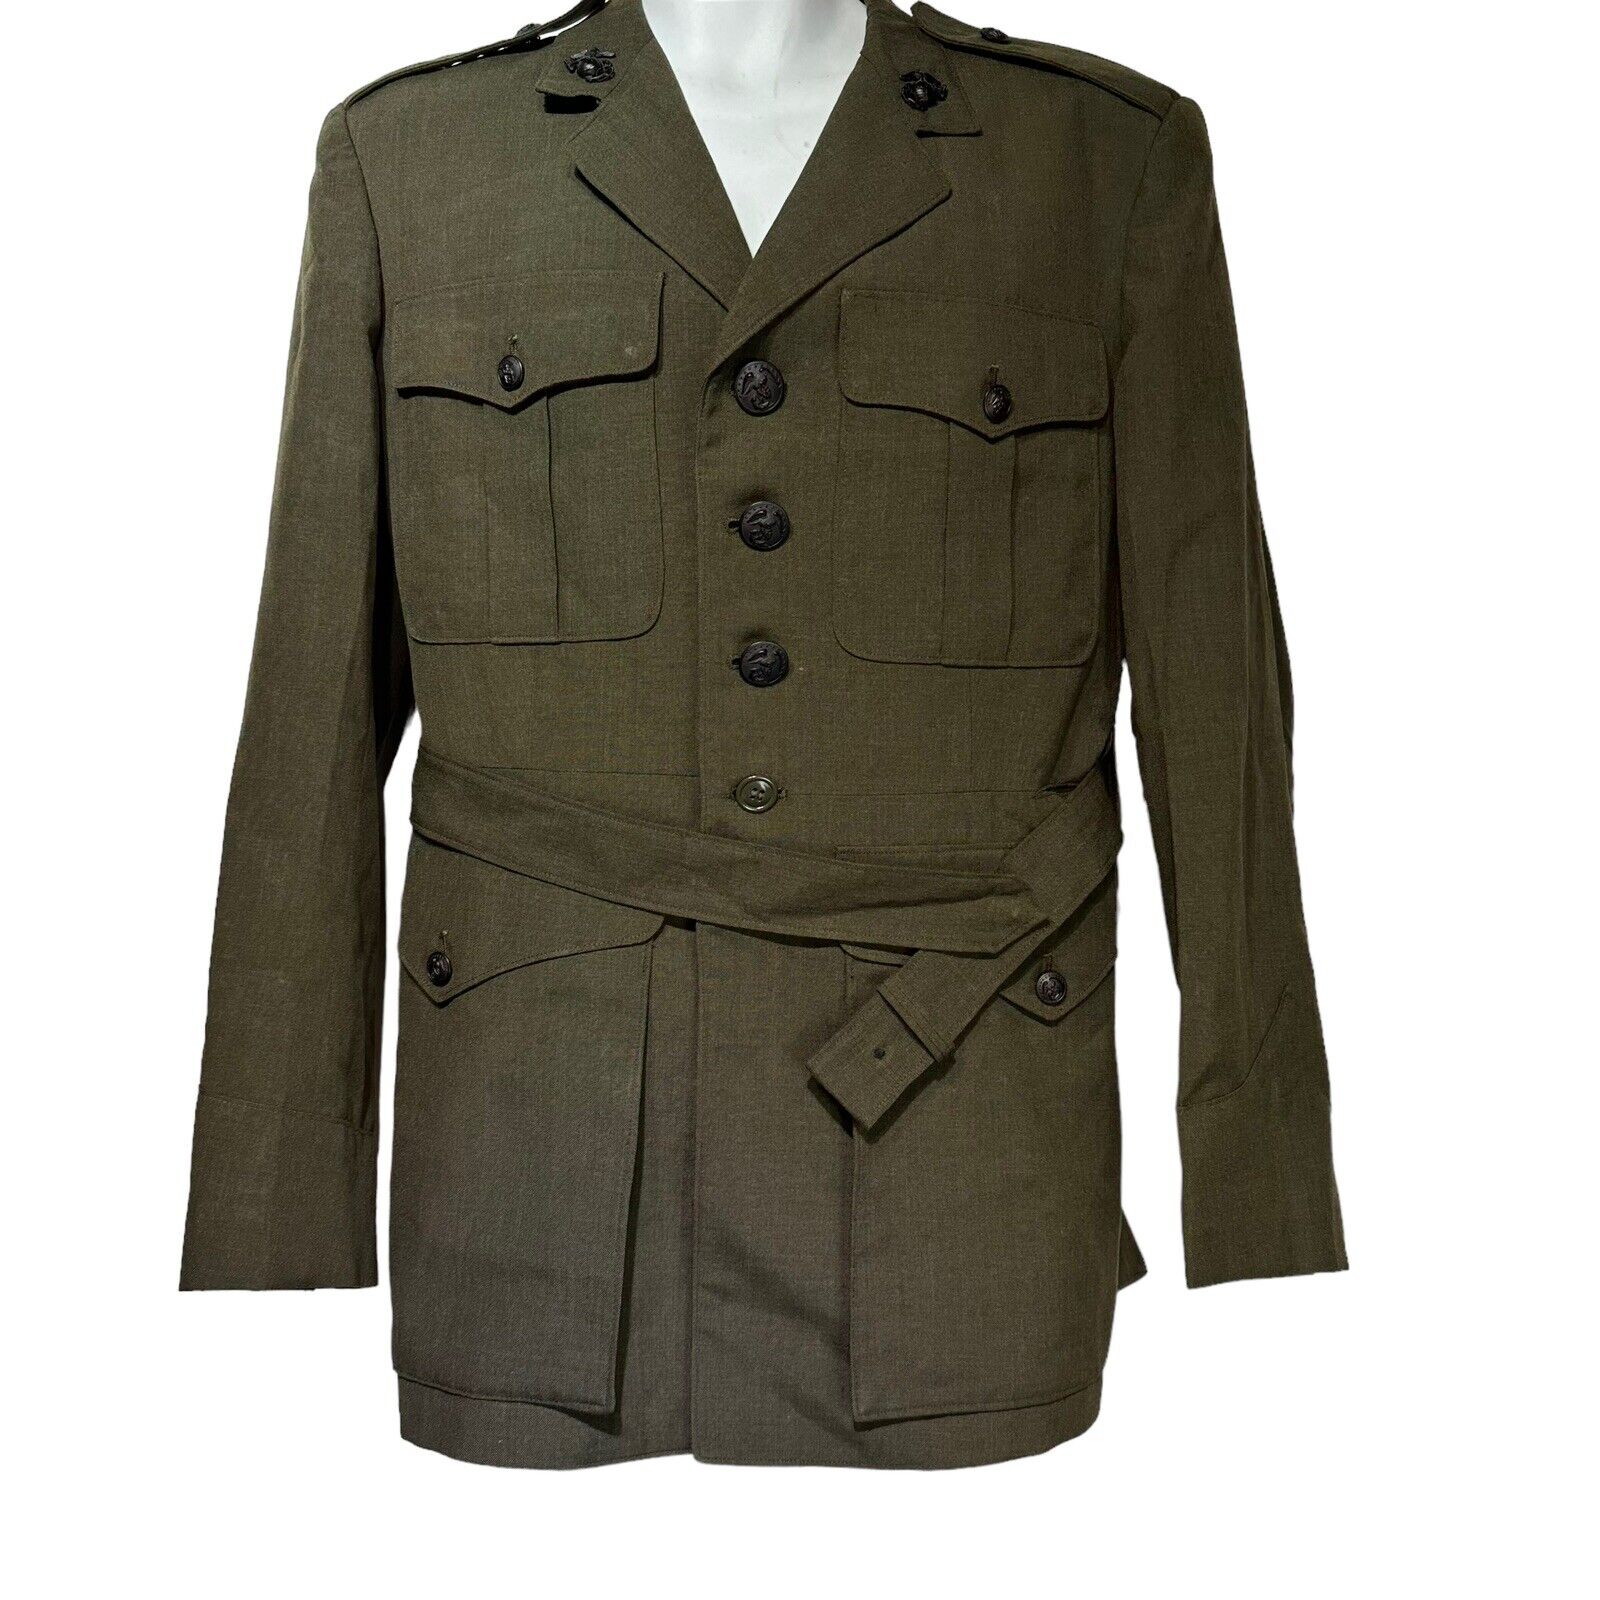 US Marine Corp Service Alpha Marines Military Green Dress Jacket Size 42R